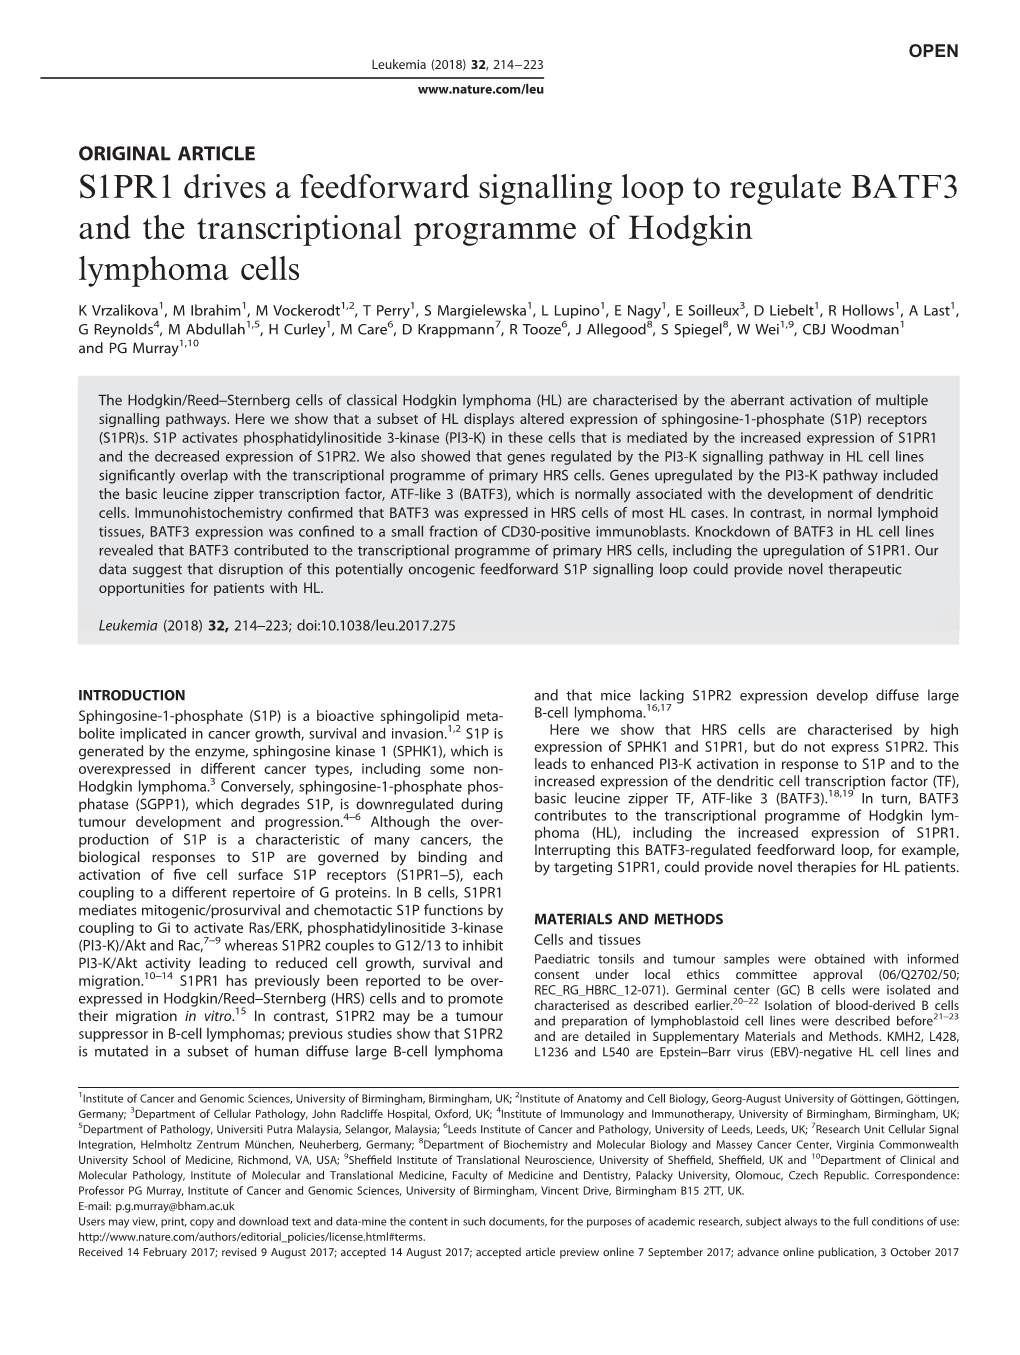 S1PR1 Drives a Feedforward Signalling Loop to Regulate BATF3 and the Transcriptional Programme of Hodgkin Lymphoma Cells